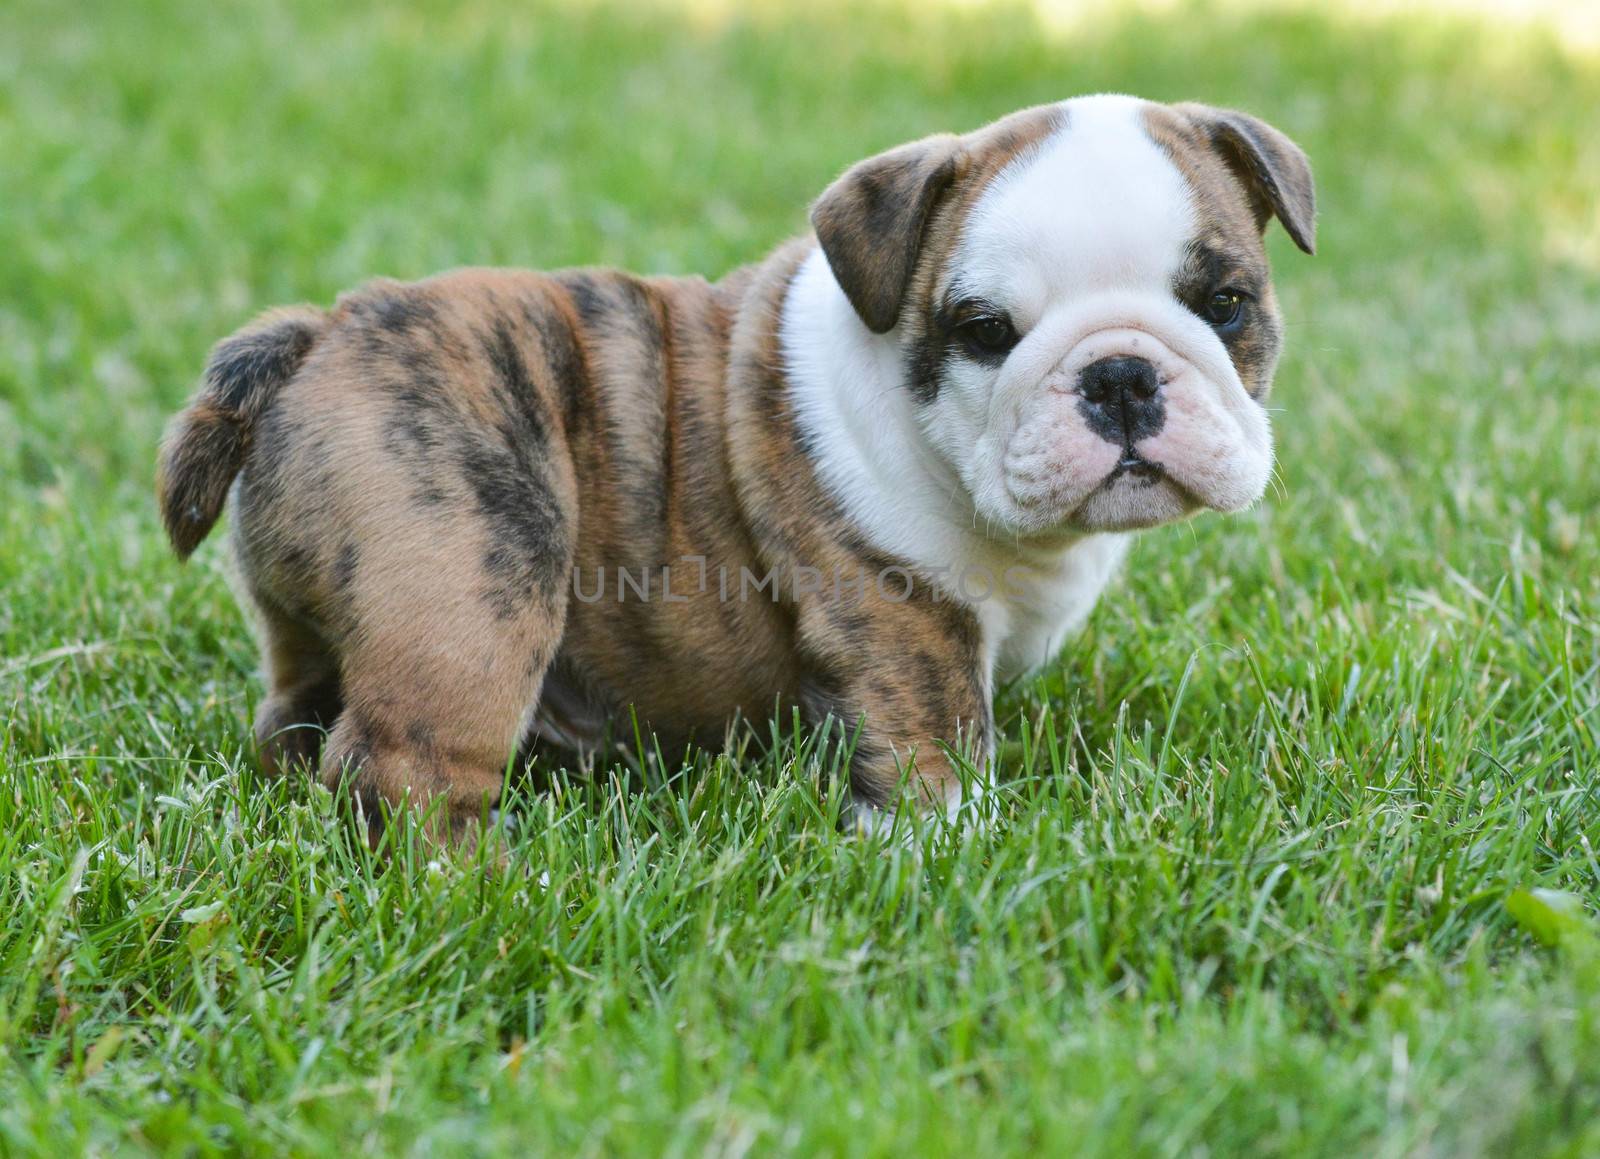 cute english bulldog puppy in the grass